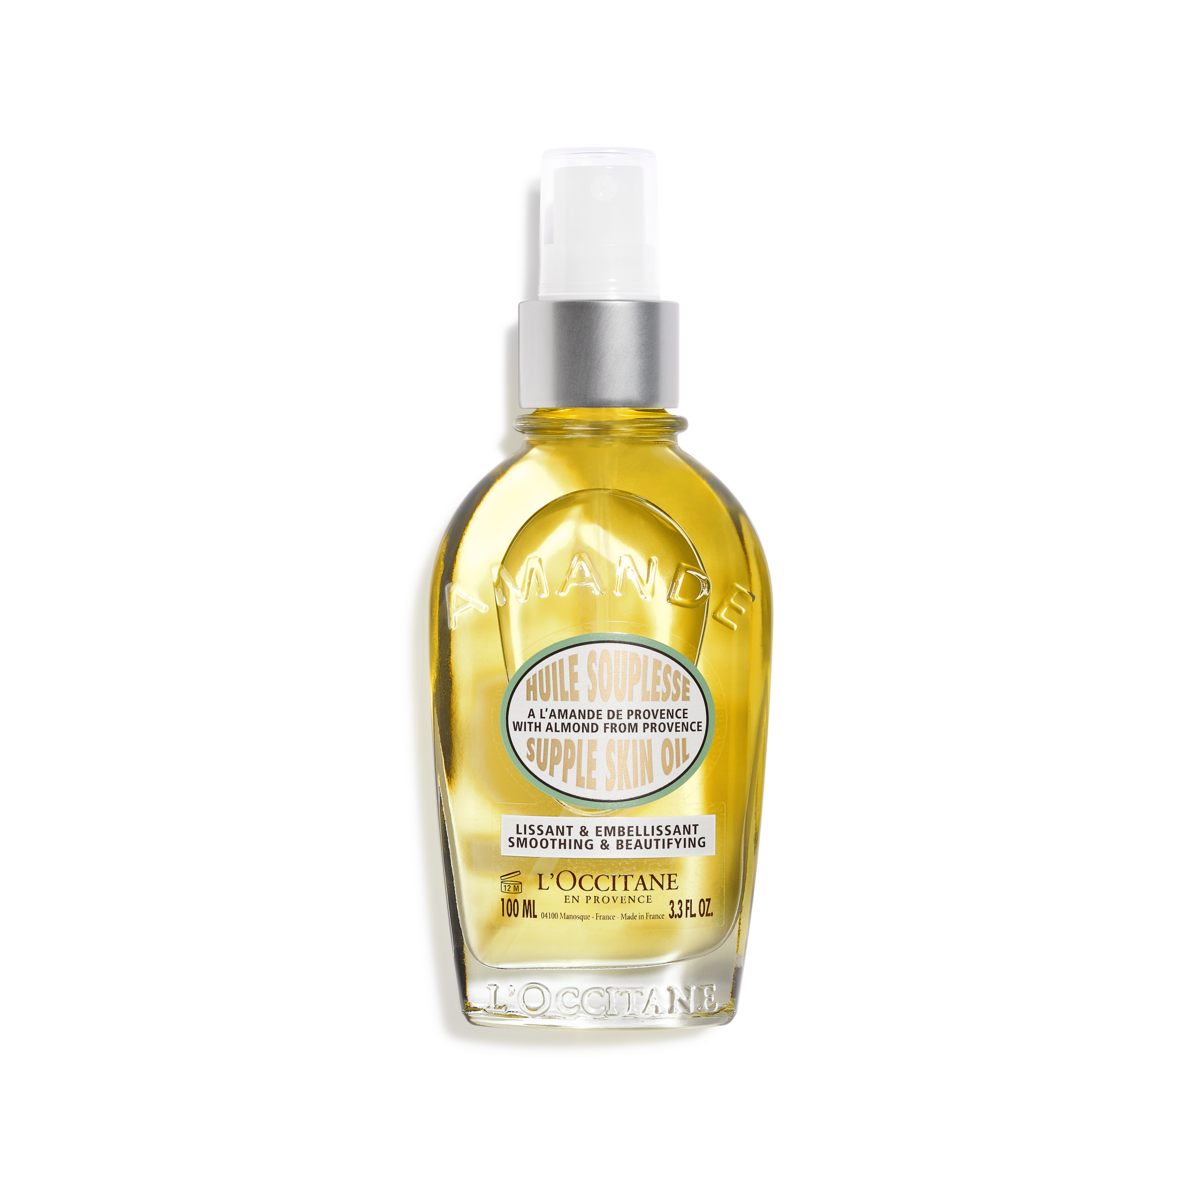 L'Occitane - Almond Supple Skin Oil 100ml